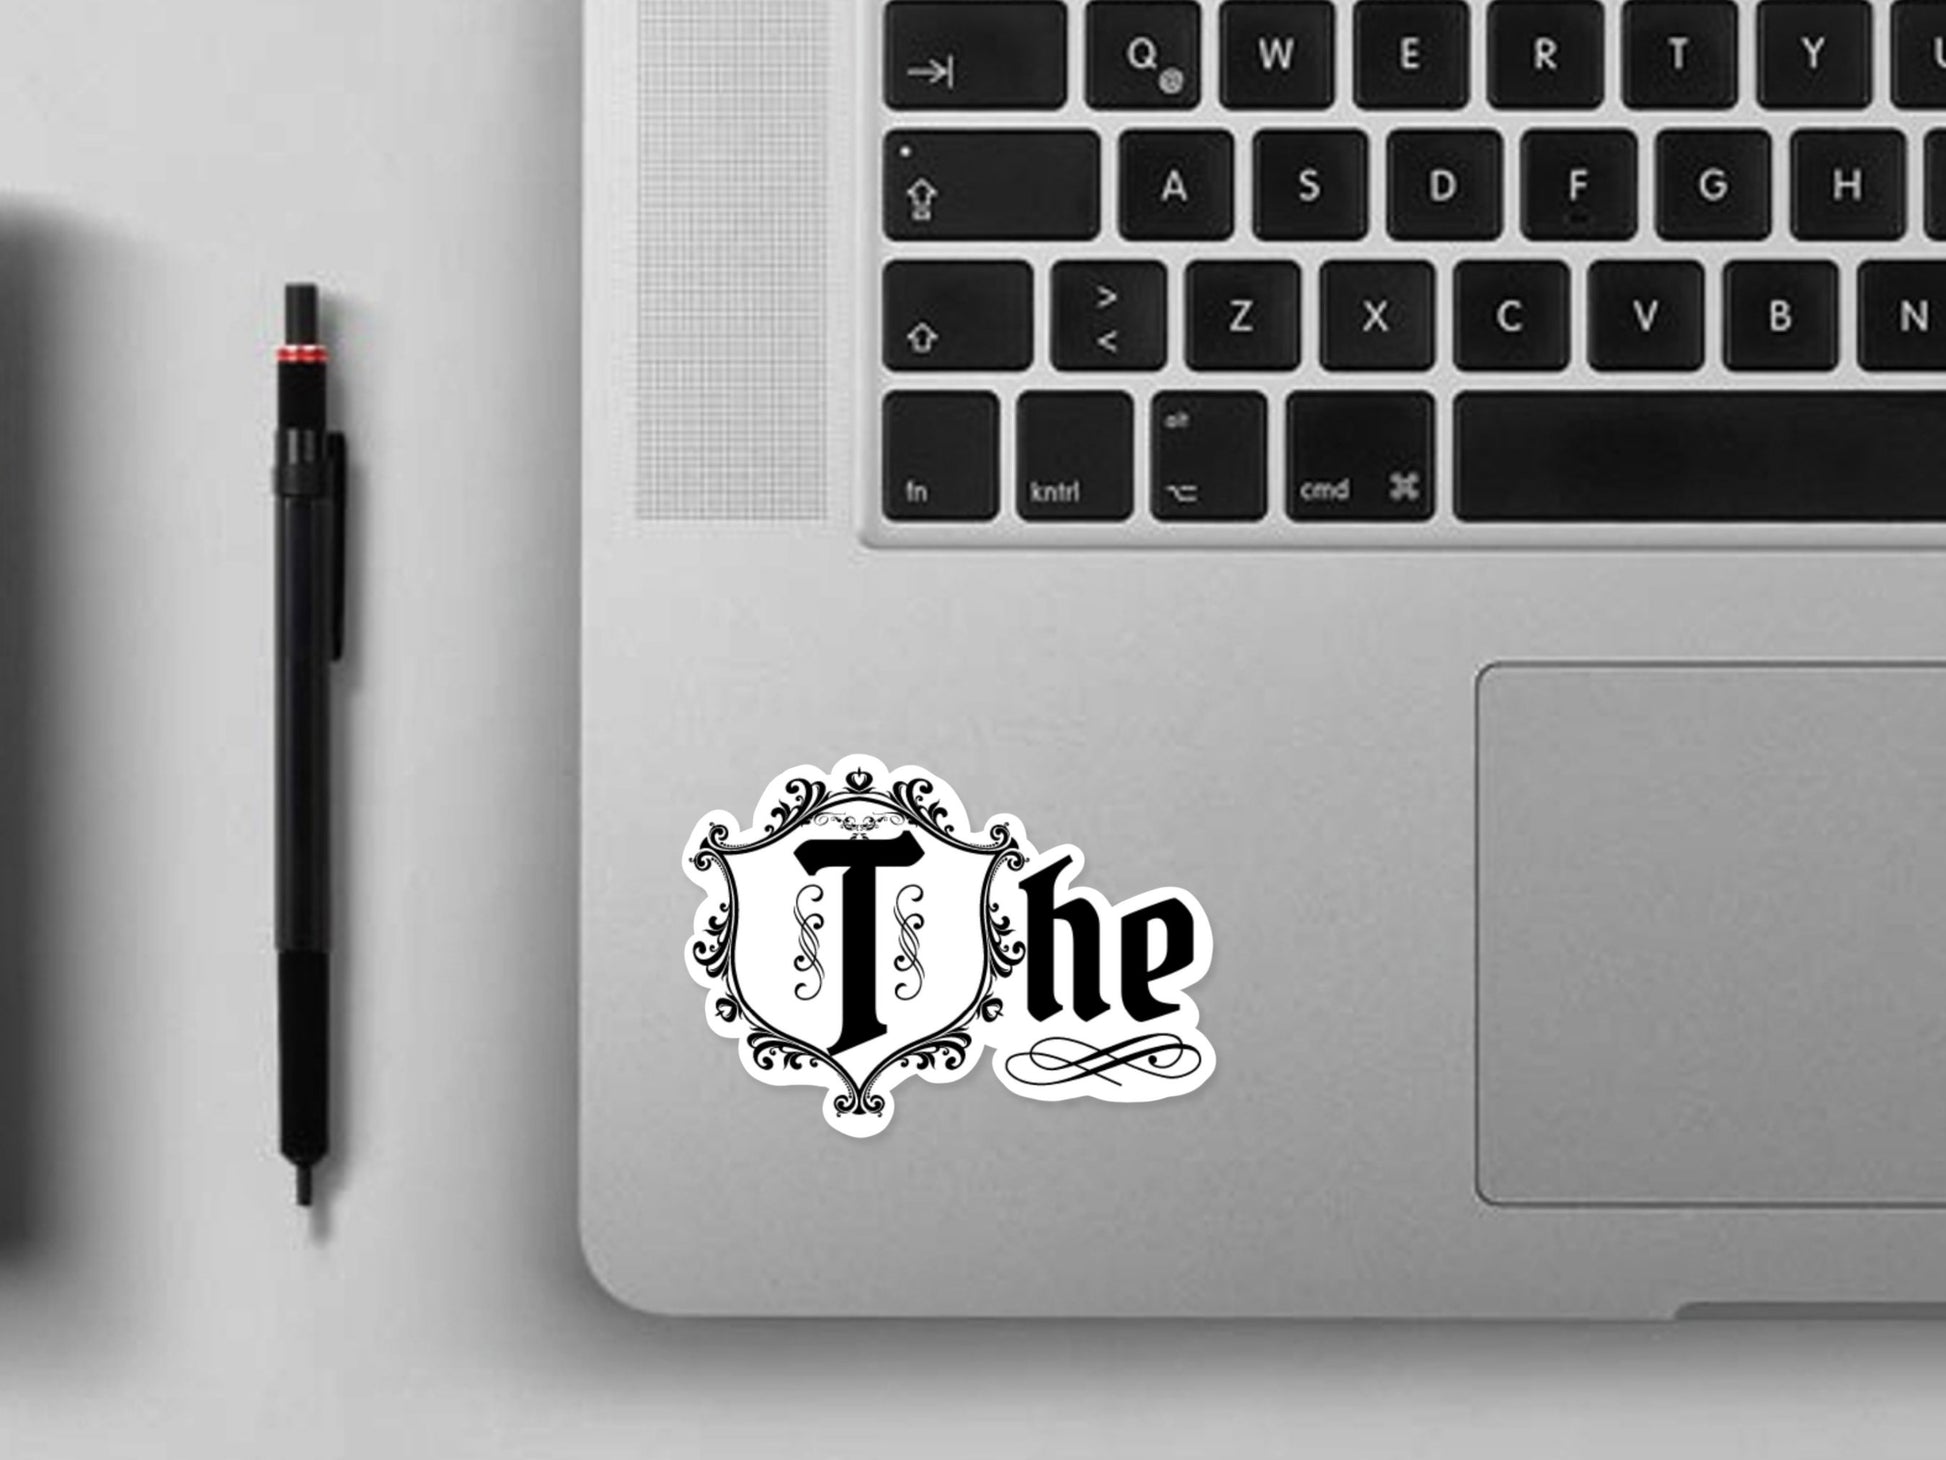 THE Sticker | Writer Gifts | Writing Motivation | Writing Laptop Sticker